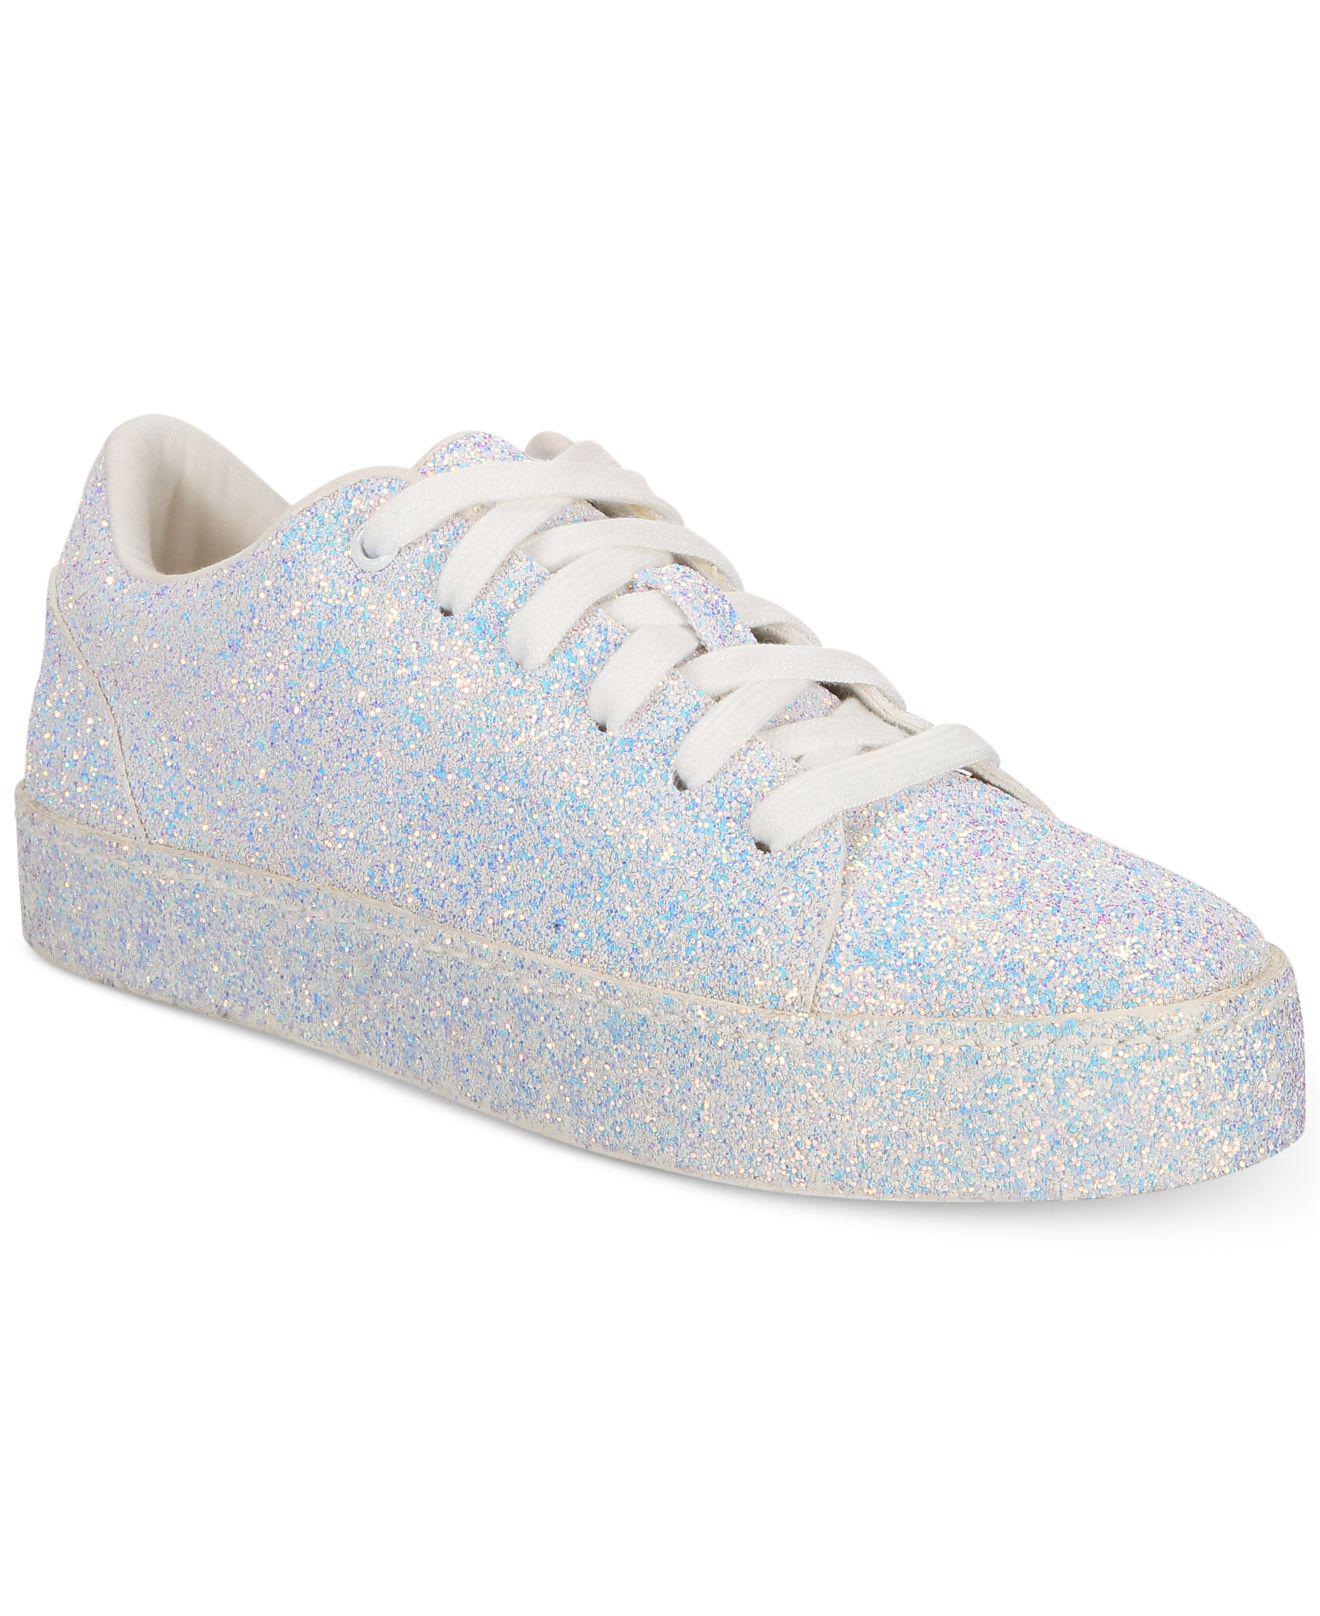 Aldo Women's White Glitter Casual Sneakers Sz 9 Brand New